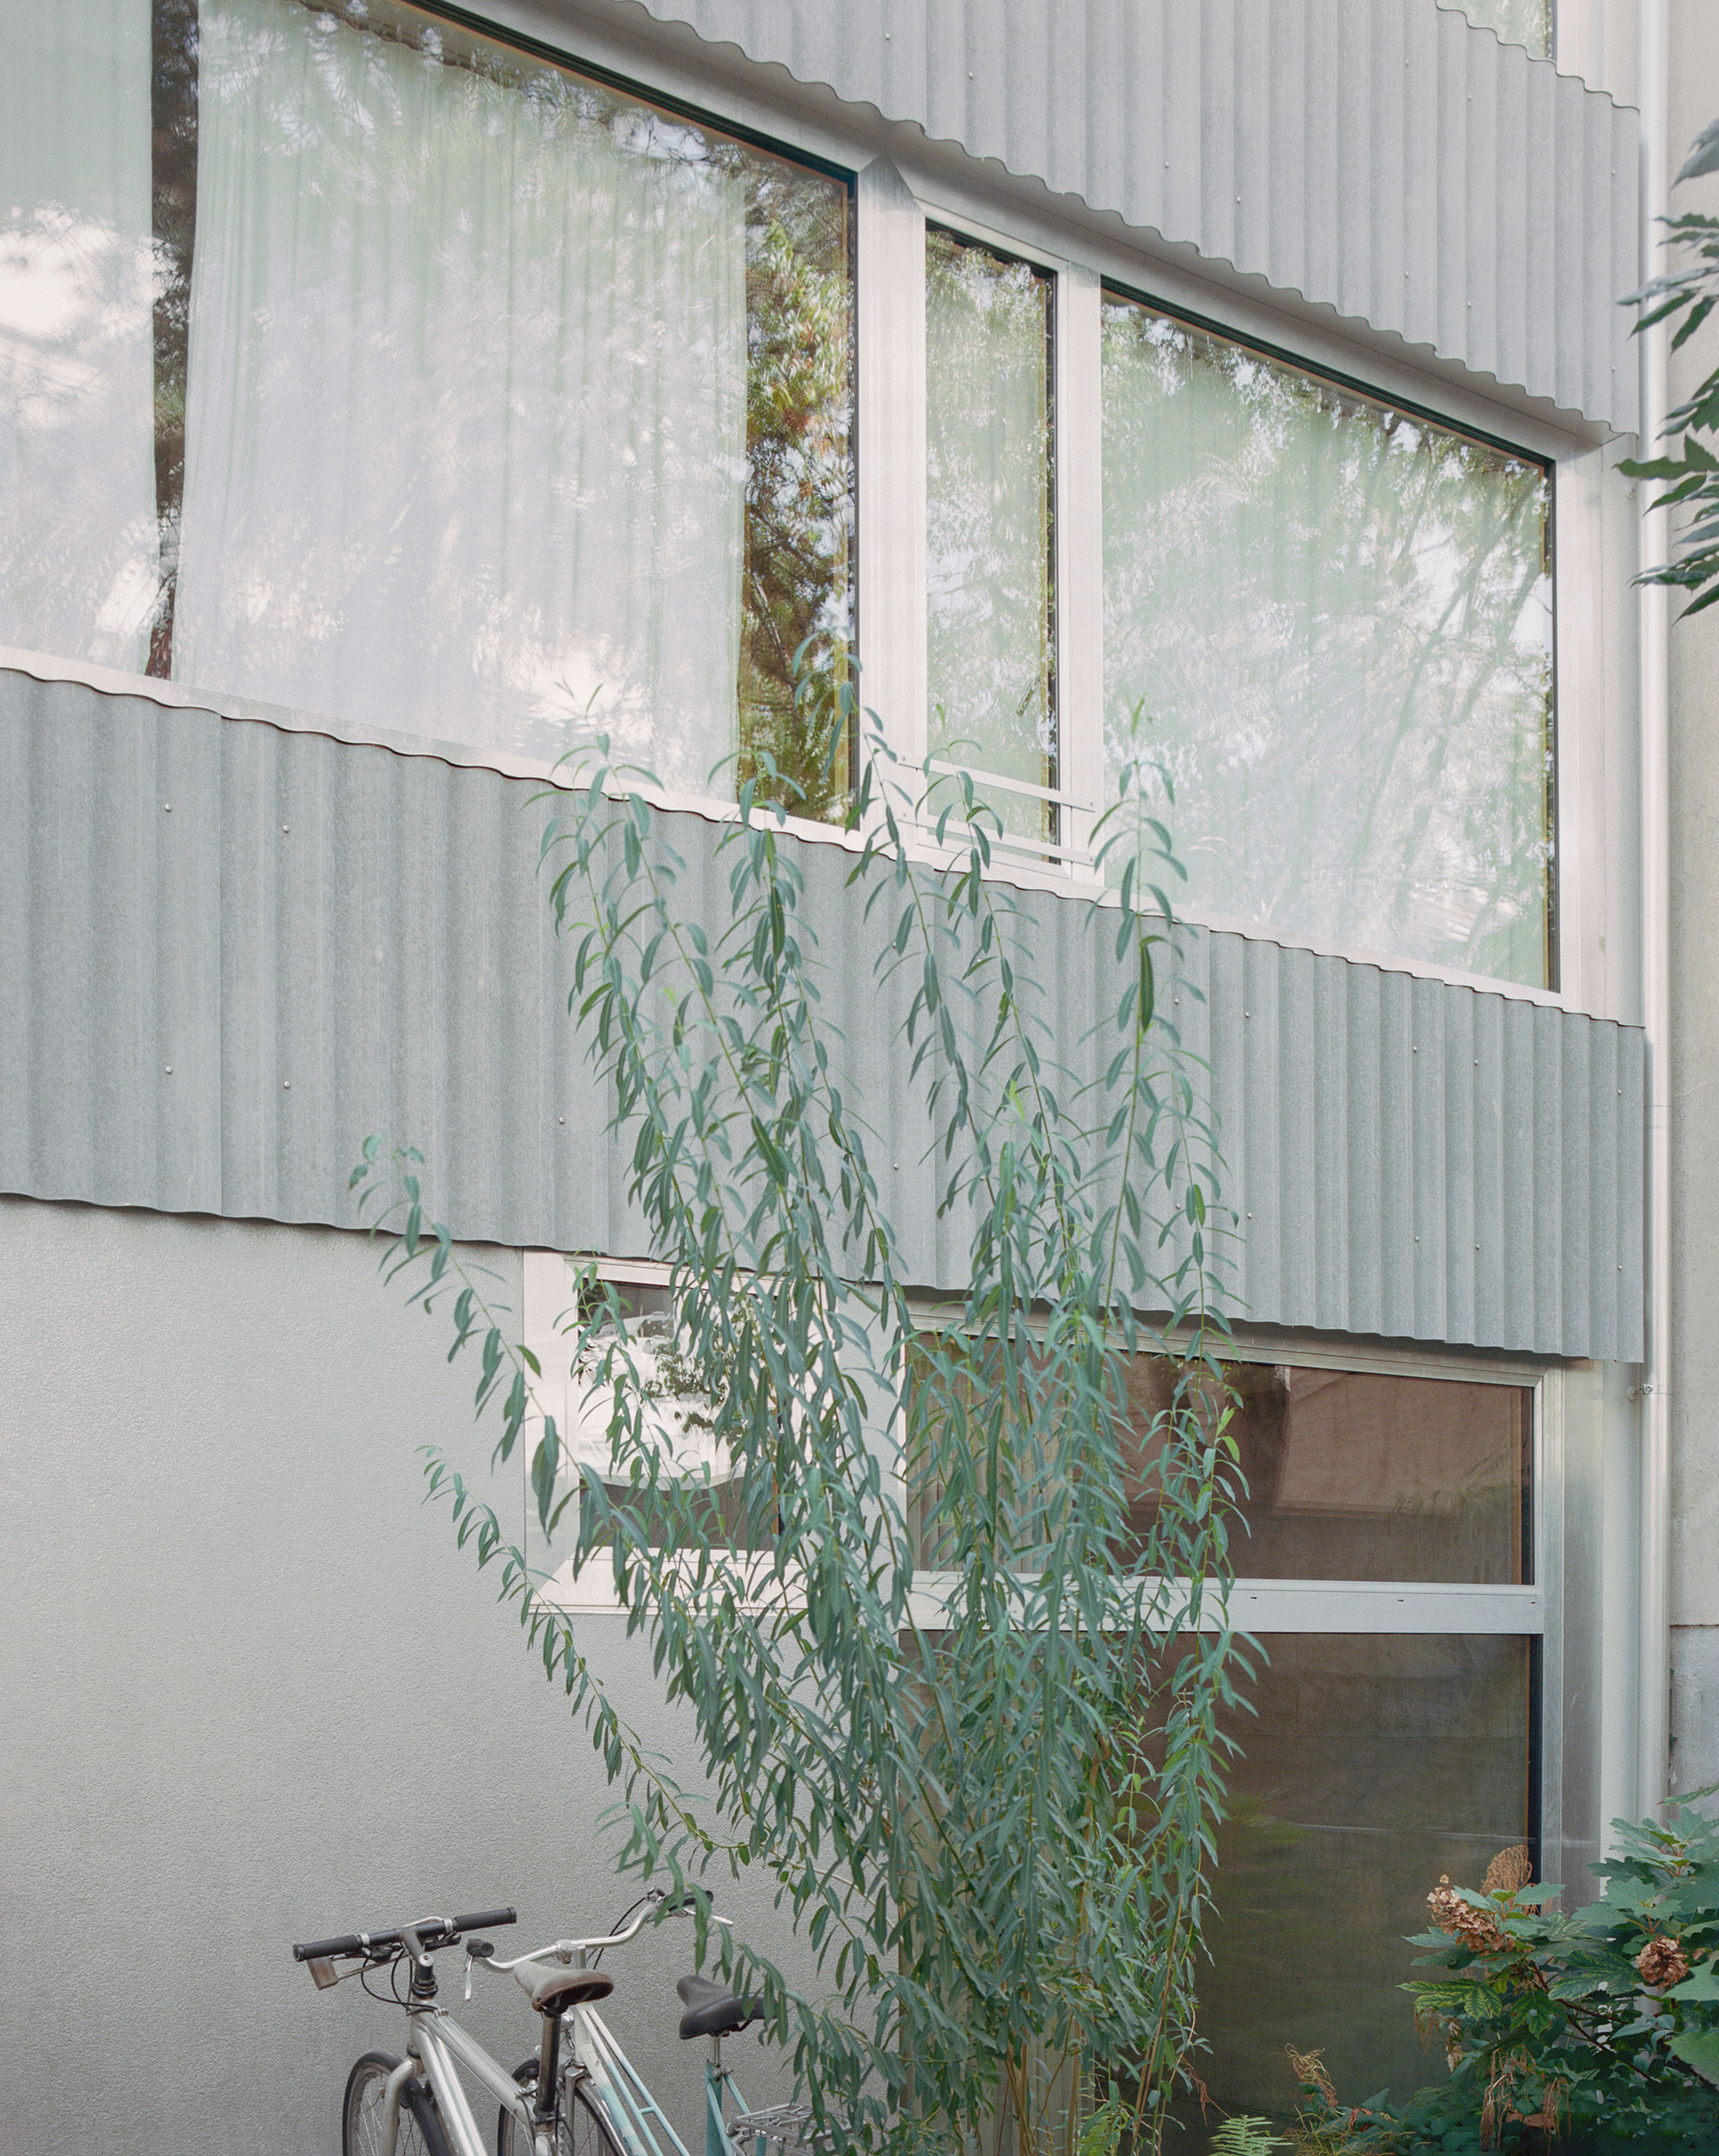 Blaesi, Four Apartments and a Studio in Basel - Gessato